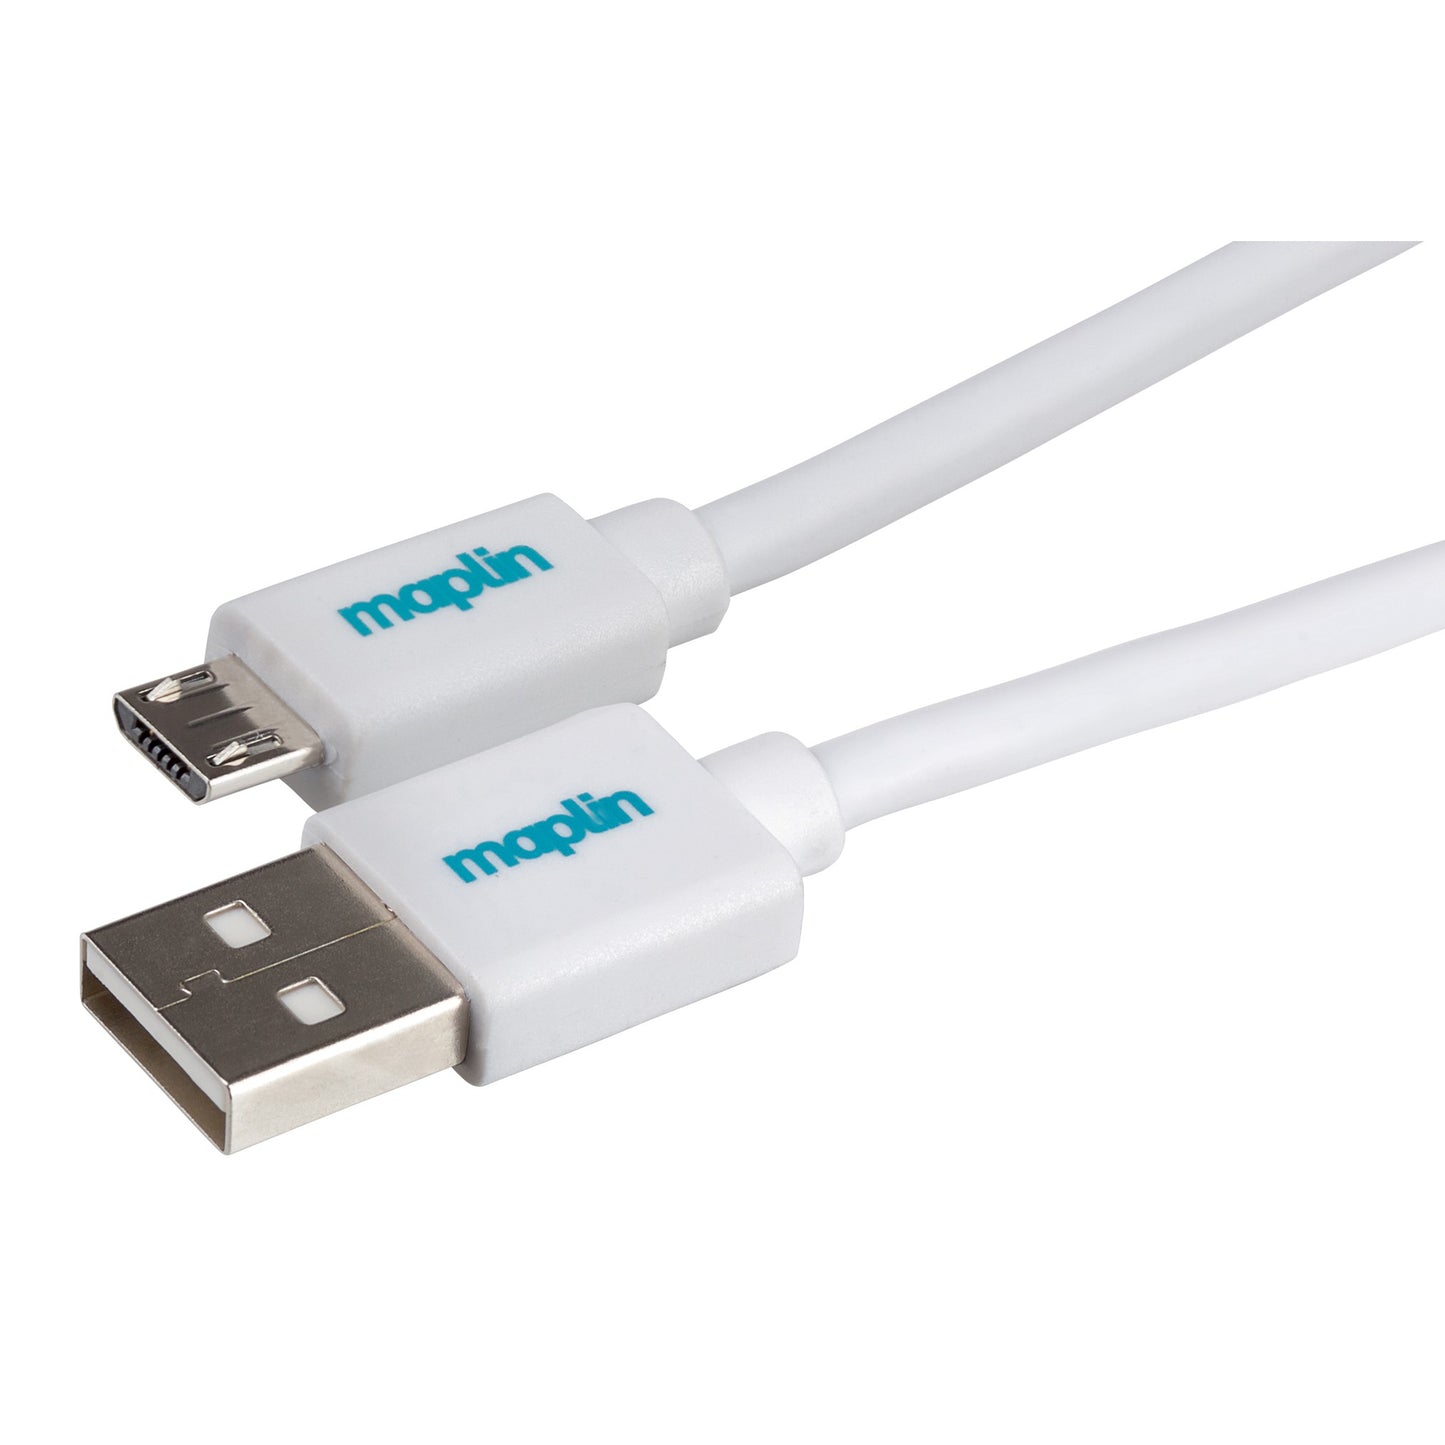 Maplin USB-A to Micro USB-B Cable - White - maplin.co.uk